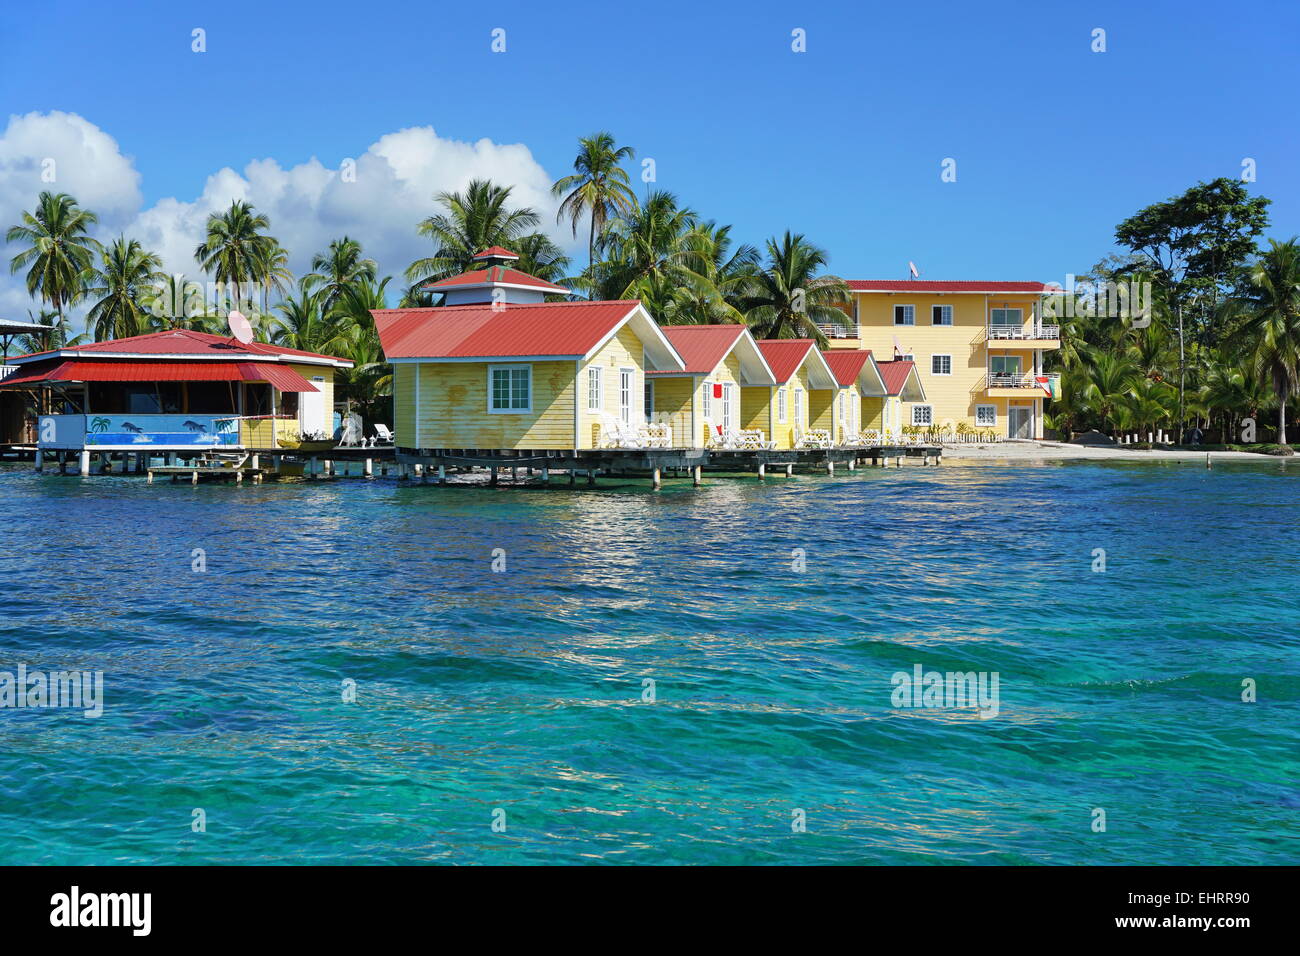 Tropischen Resort mit Kabine über dem Wasser des karibischen Meeres, Insel Carenero, Bocas del Toro, Panama, Mittelamerika Stockfoto